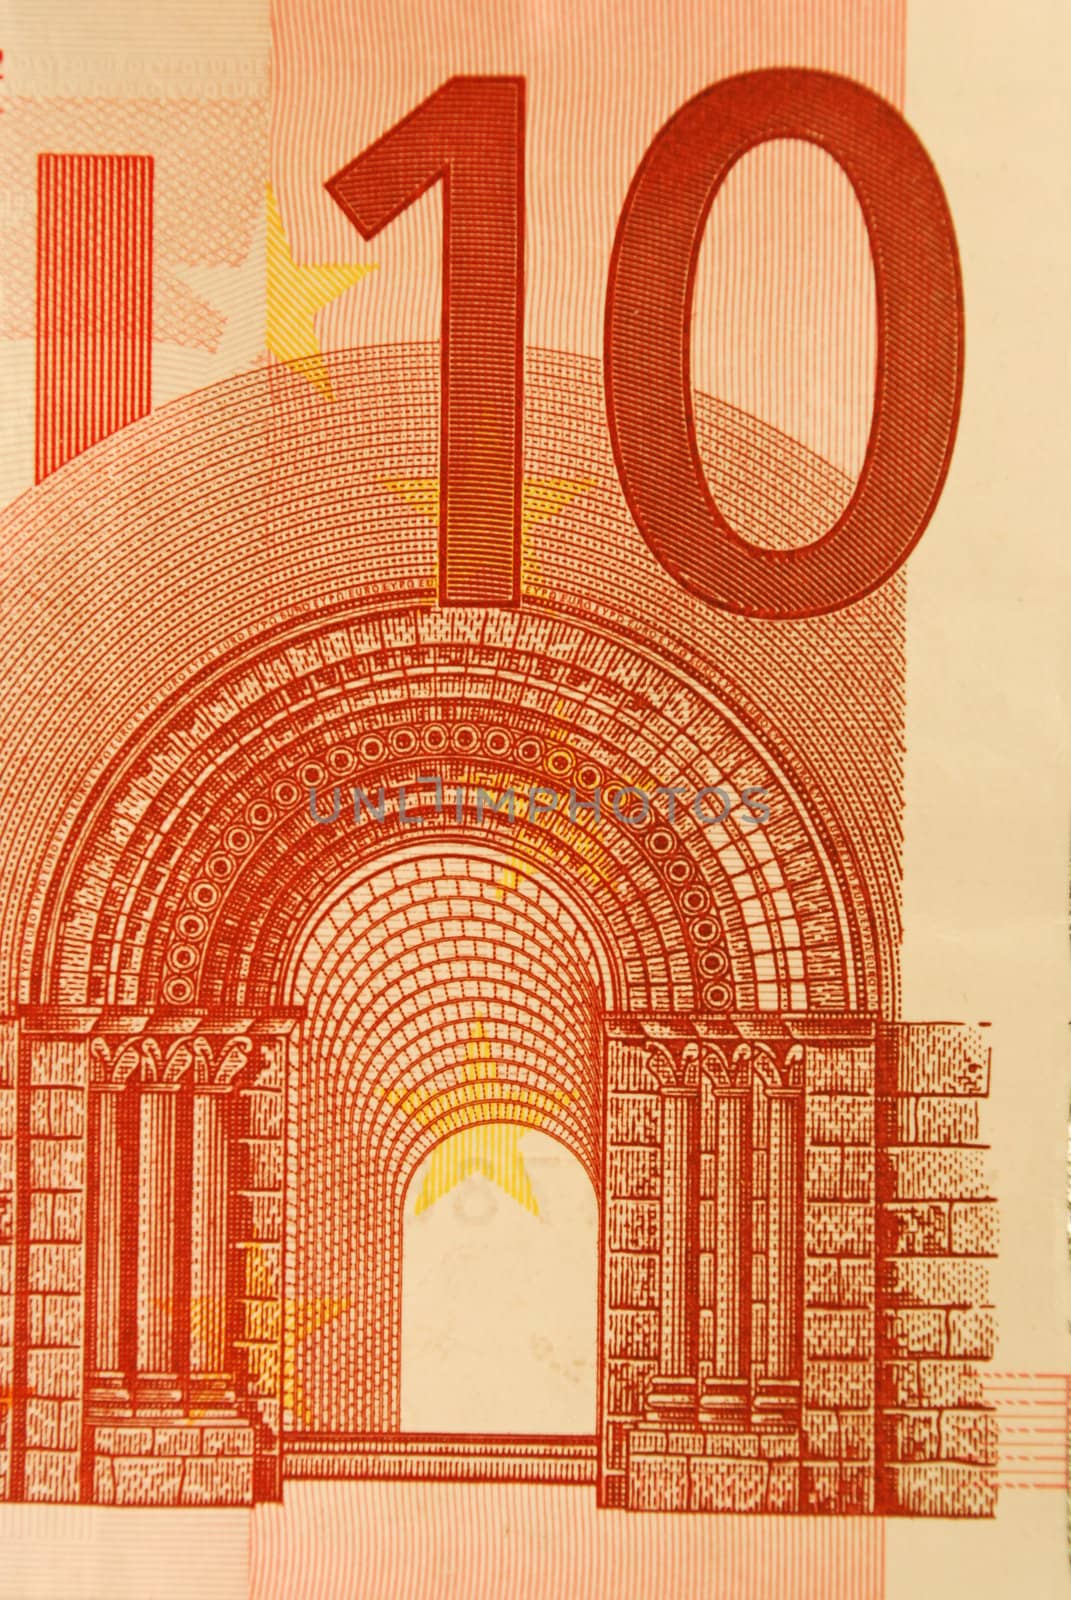 10 Euro bill (close up) by luissantos84